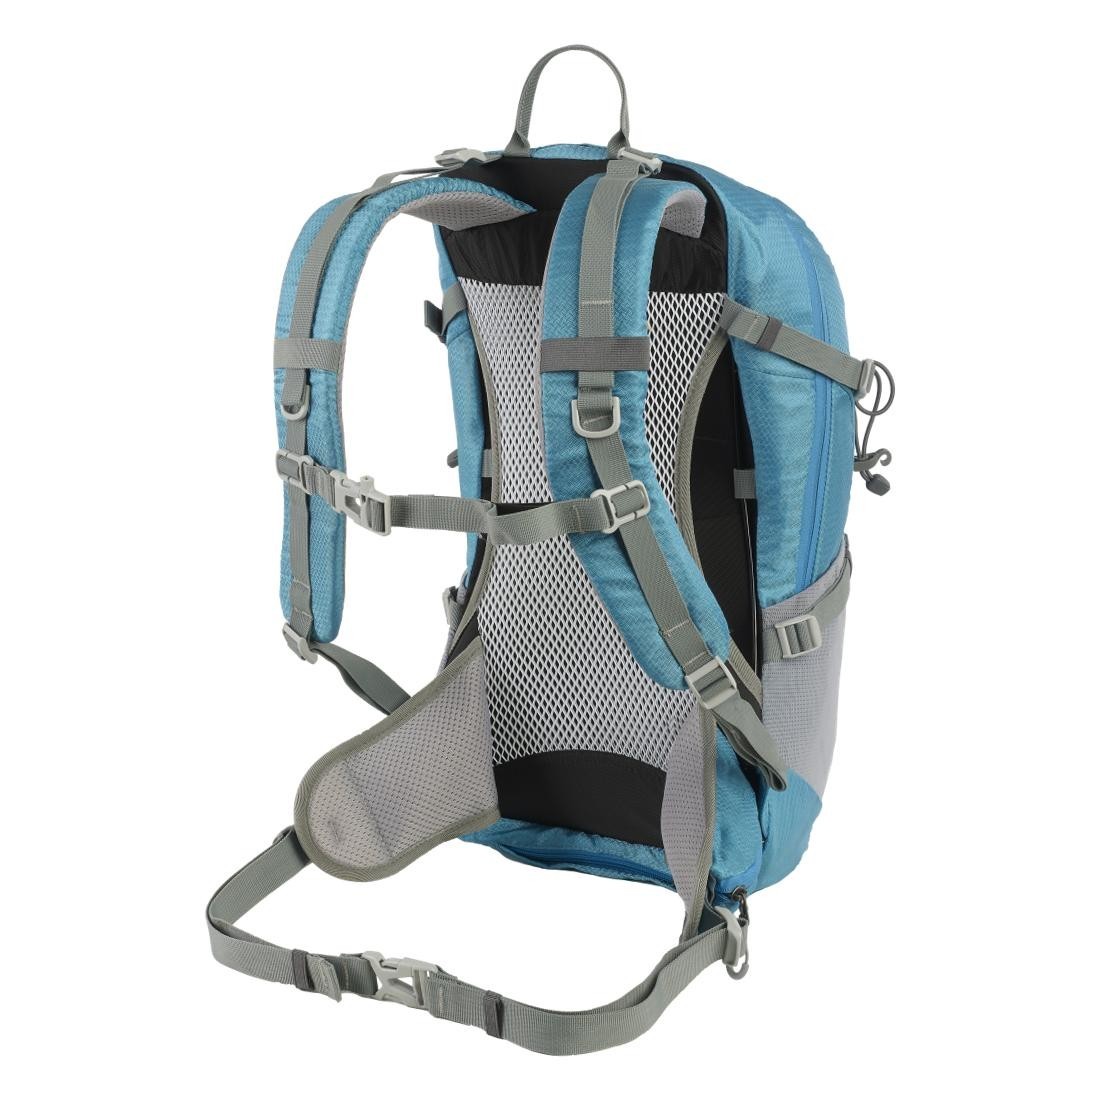 H.L. 25 - Trekking backpack 25 liters